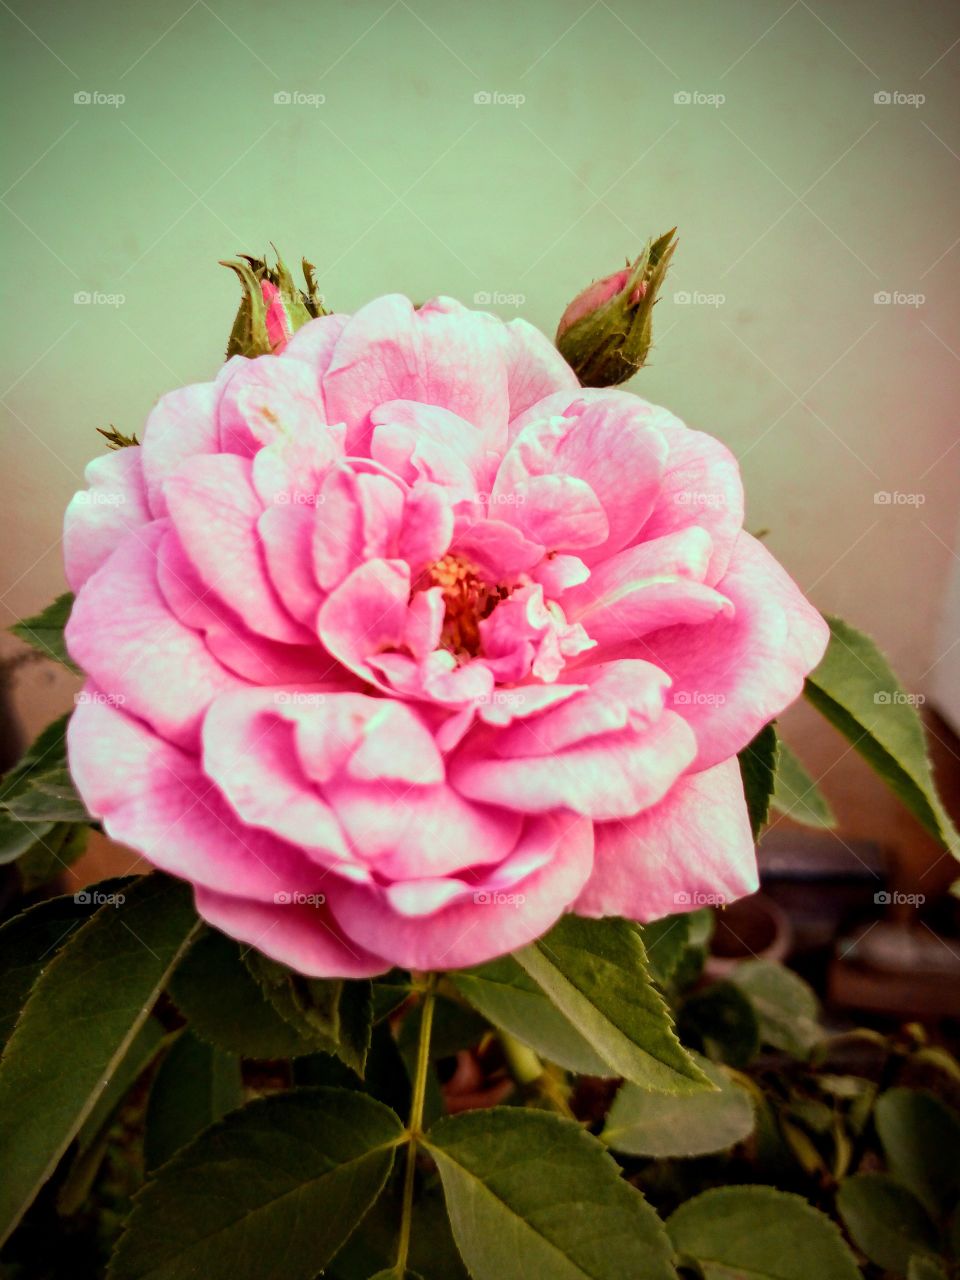 A Pink Rose Flower